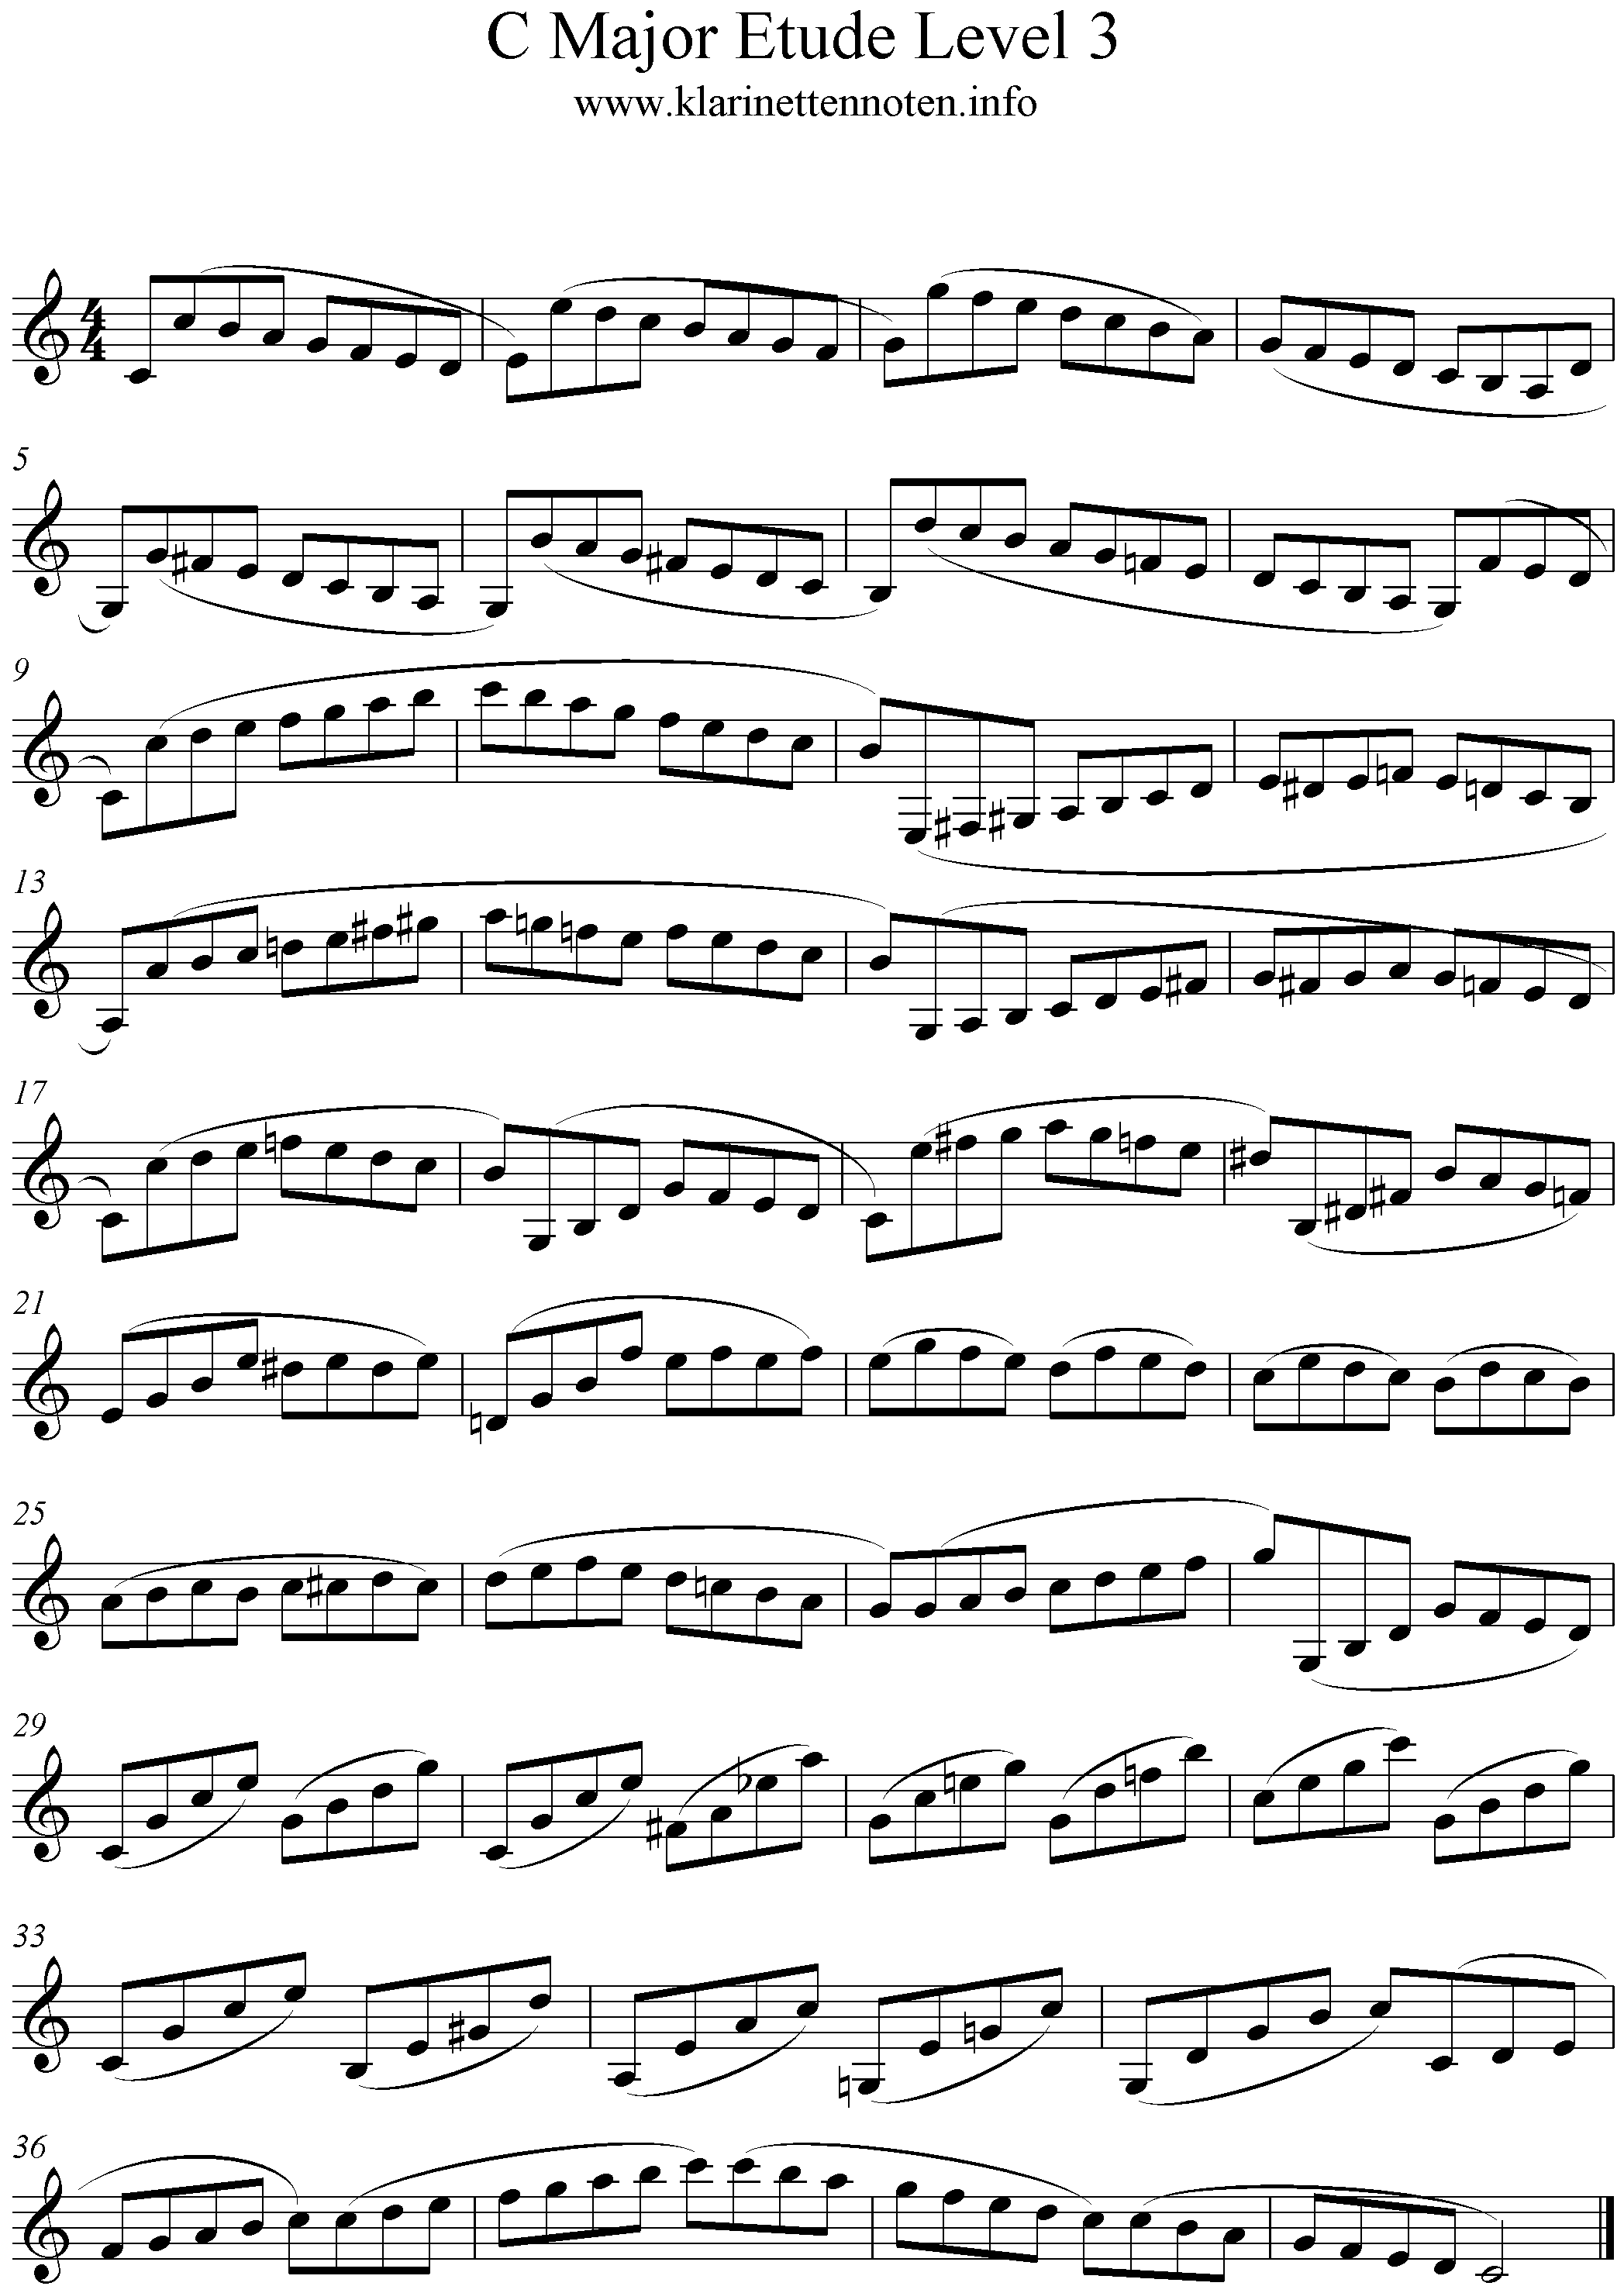 C Major Etude for Clarinet, Klarinette